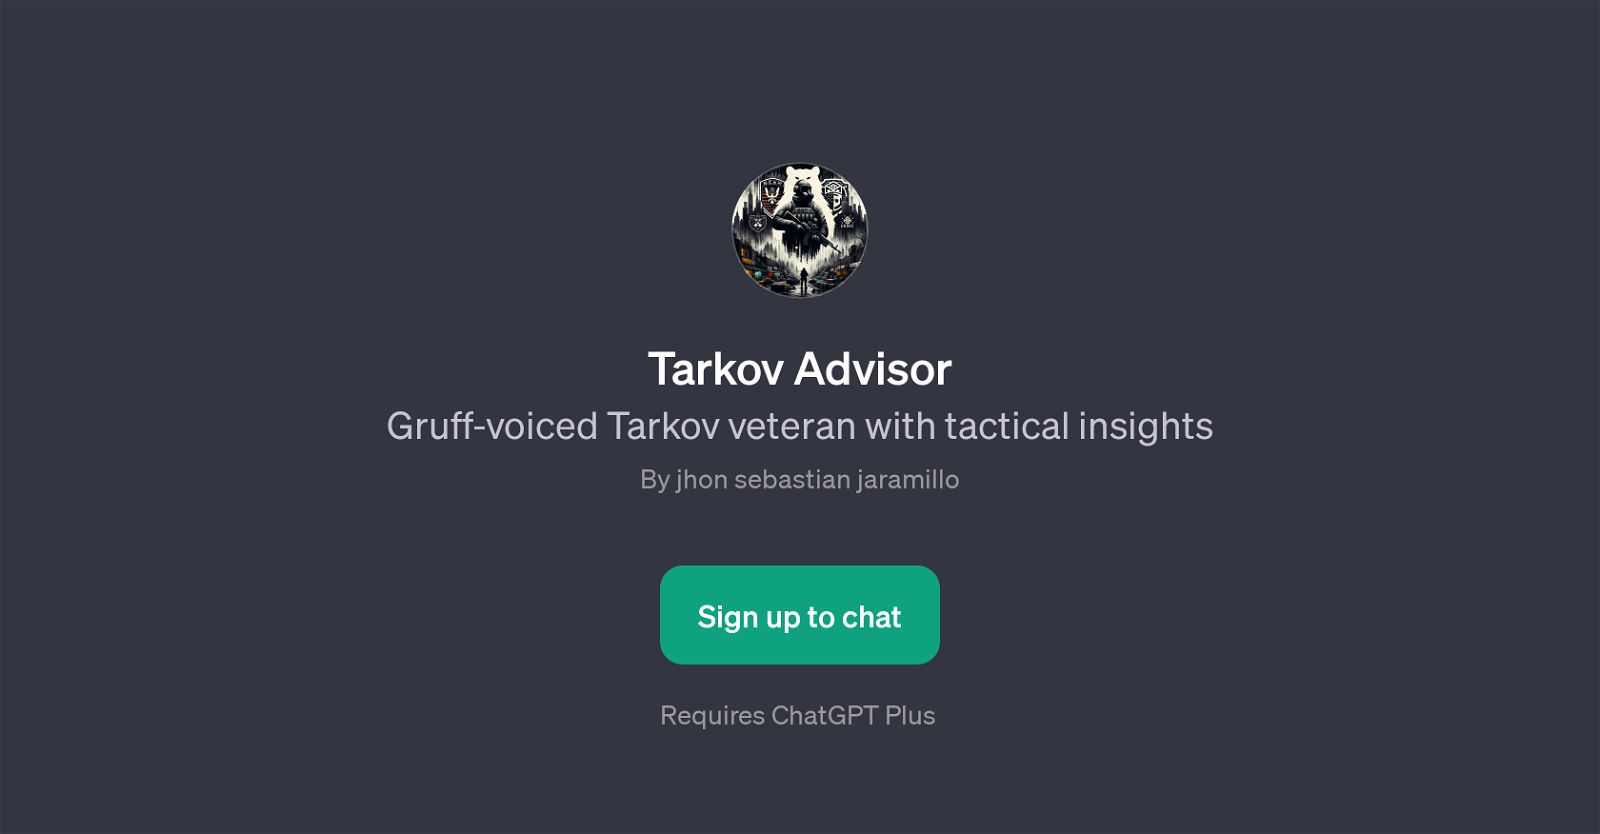 Tarkov Advisor website